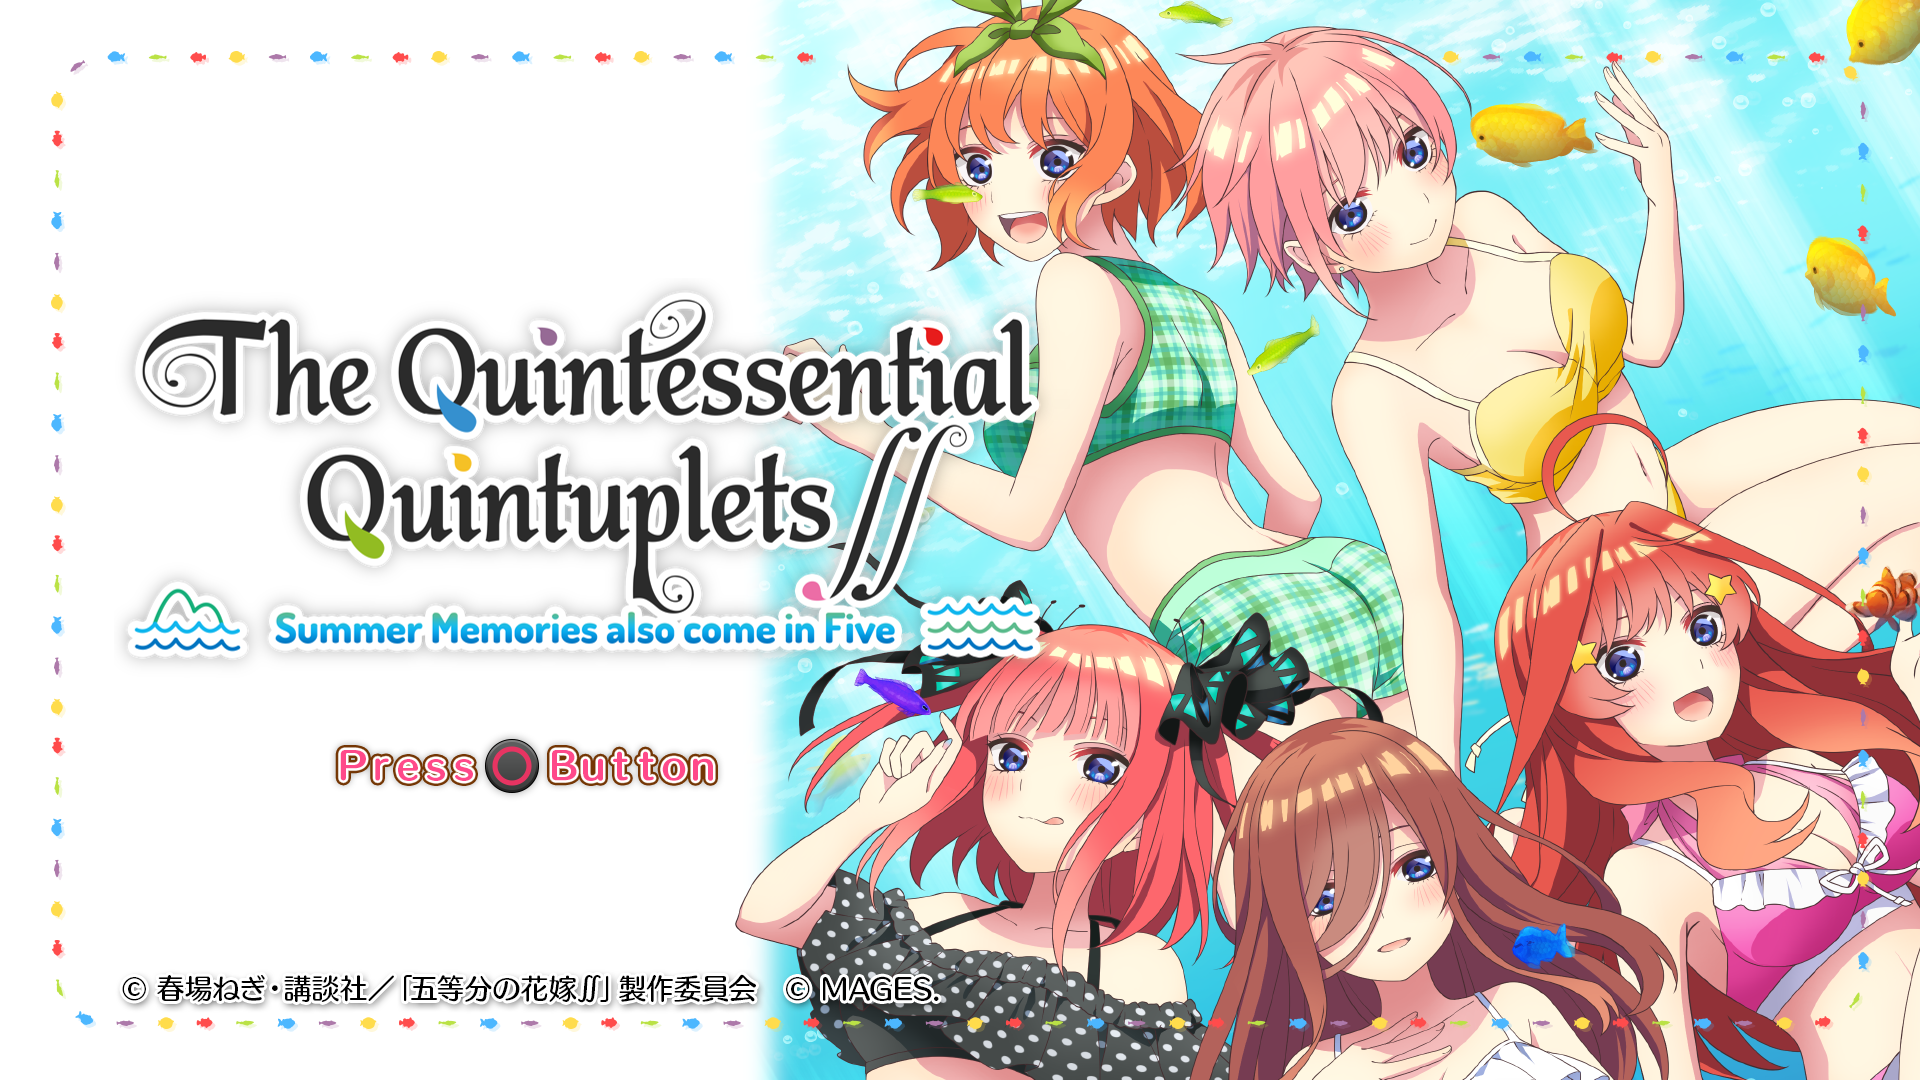 The Quintessential Quintuplets Games - IGN